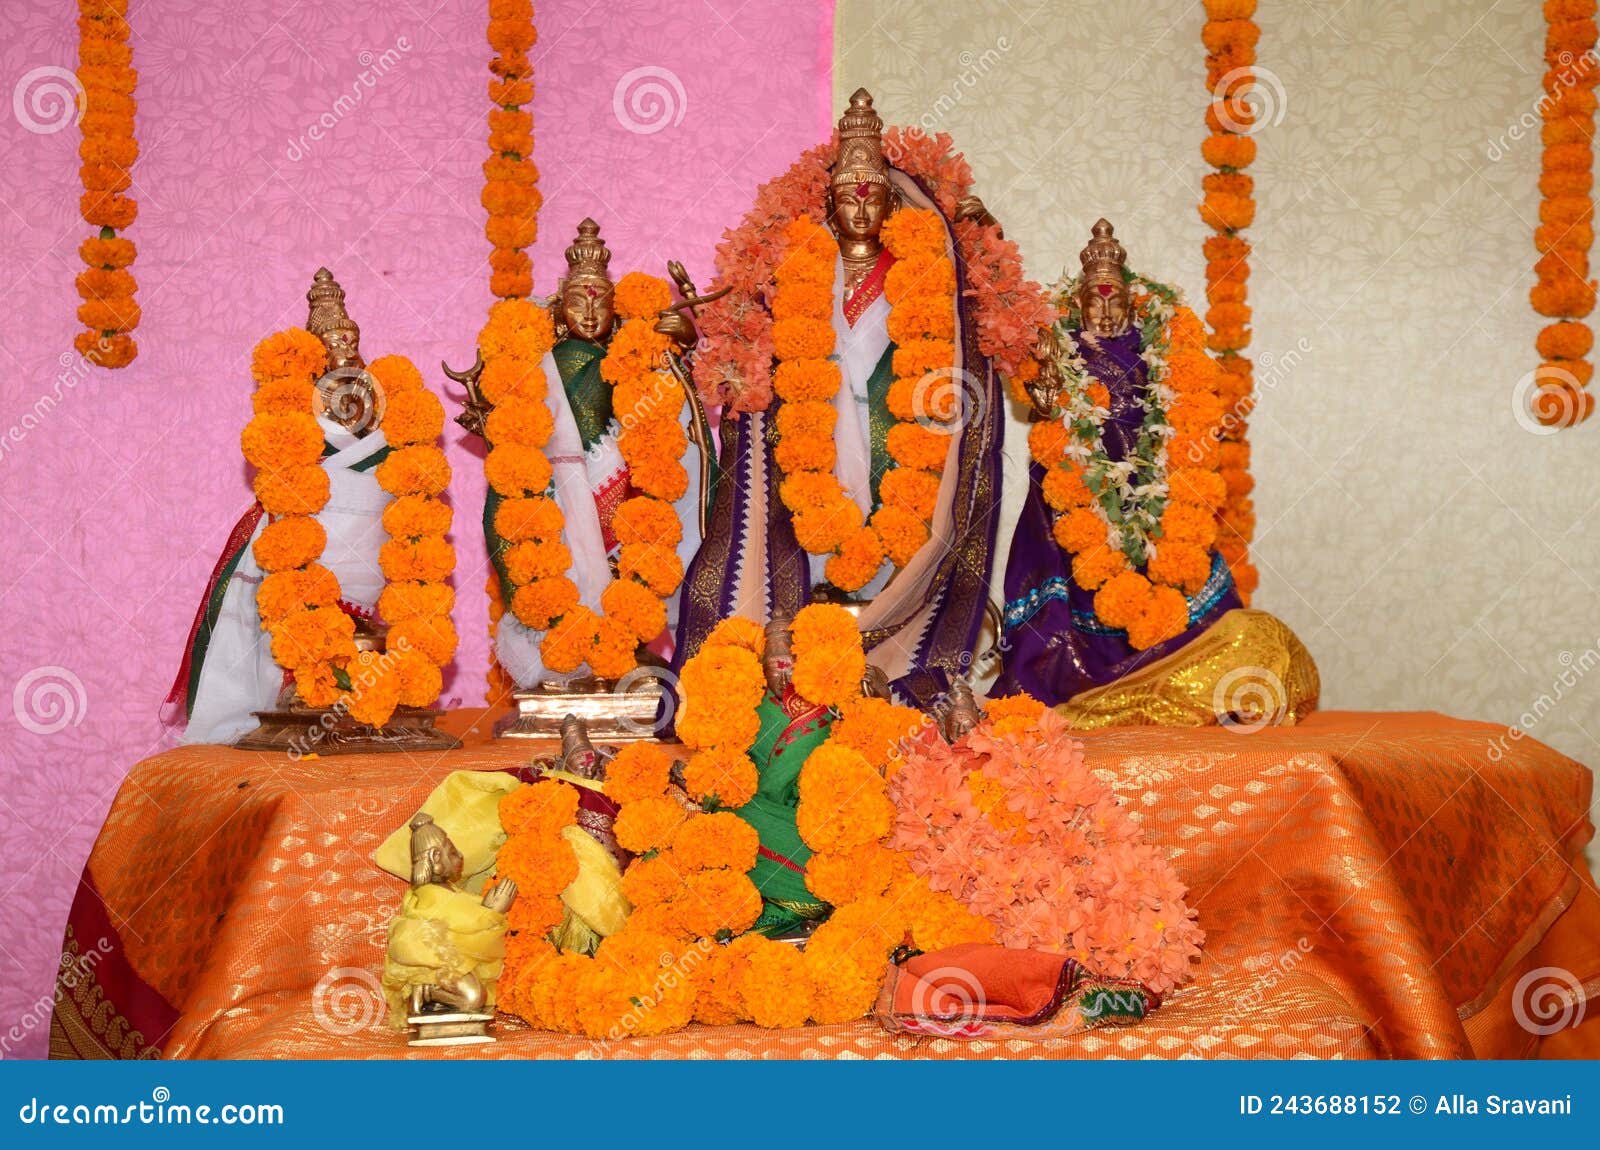 The Famous Hindu Festival Sri Rama Navami in India Stock Photo ...